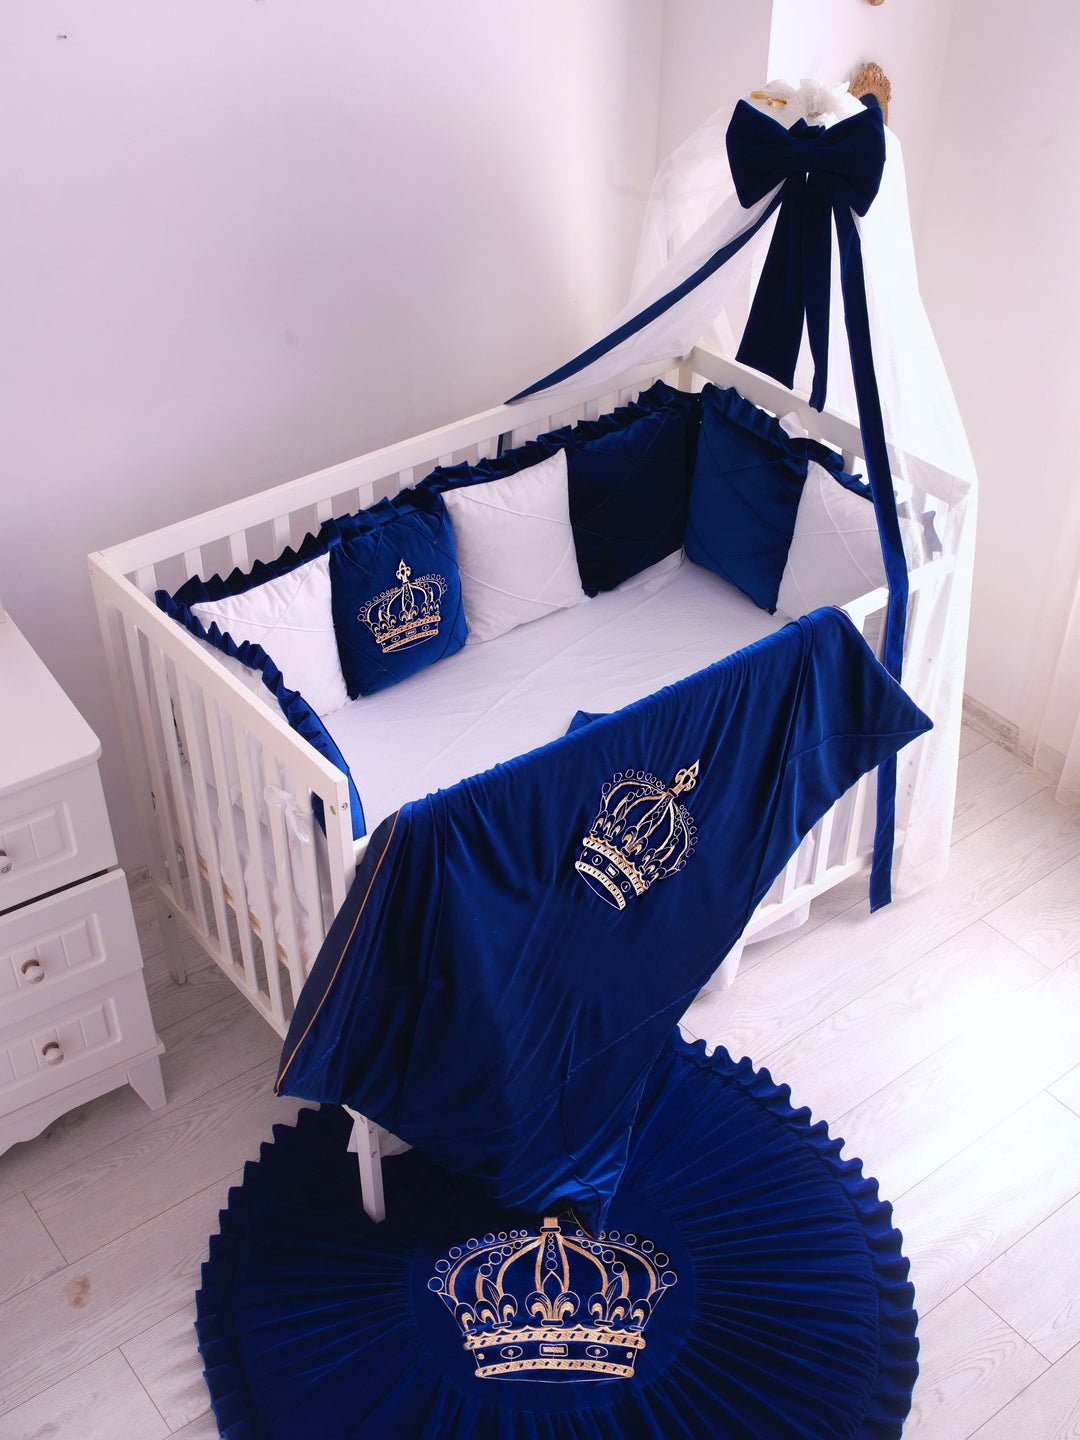 Crib bumper, crib bedding set boy in kind Royal luxury theme, Baby boy crib bedding set with canopy, navy blue monogram bumper for crib